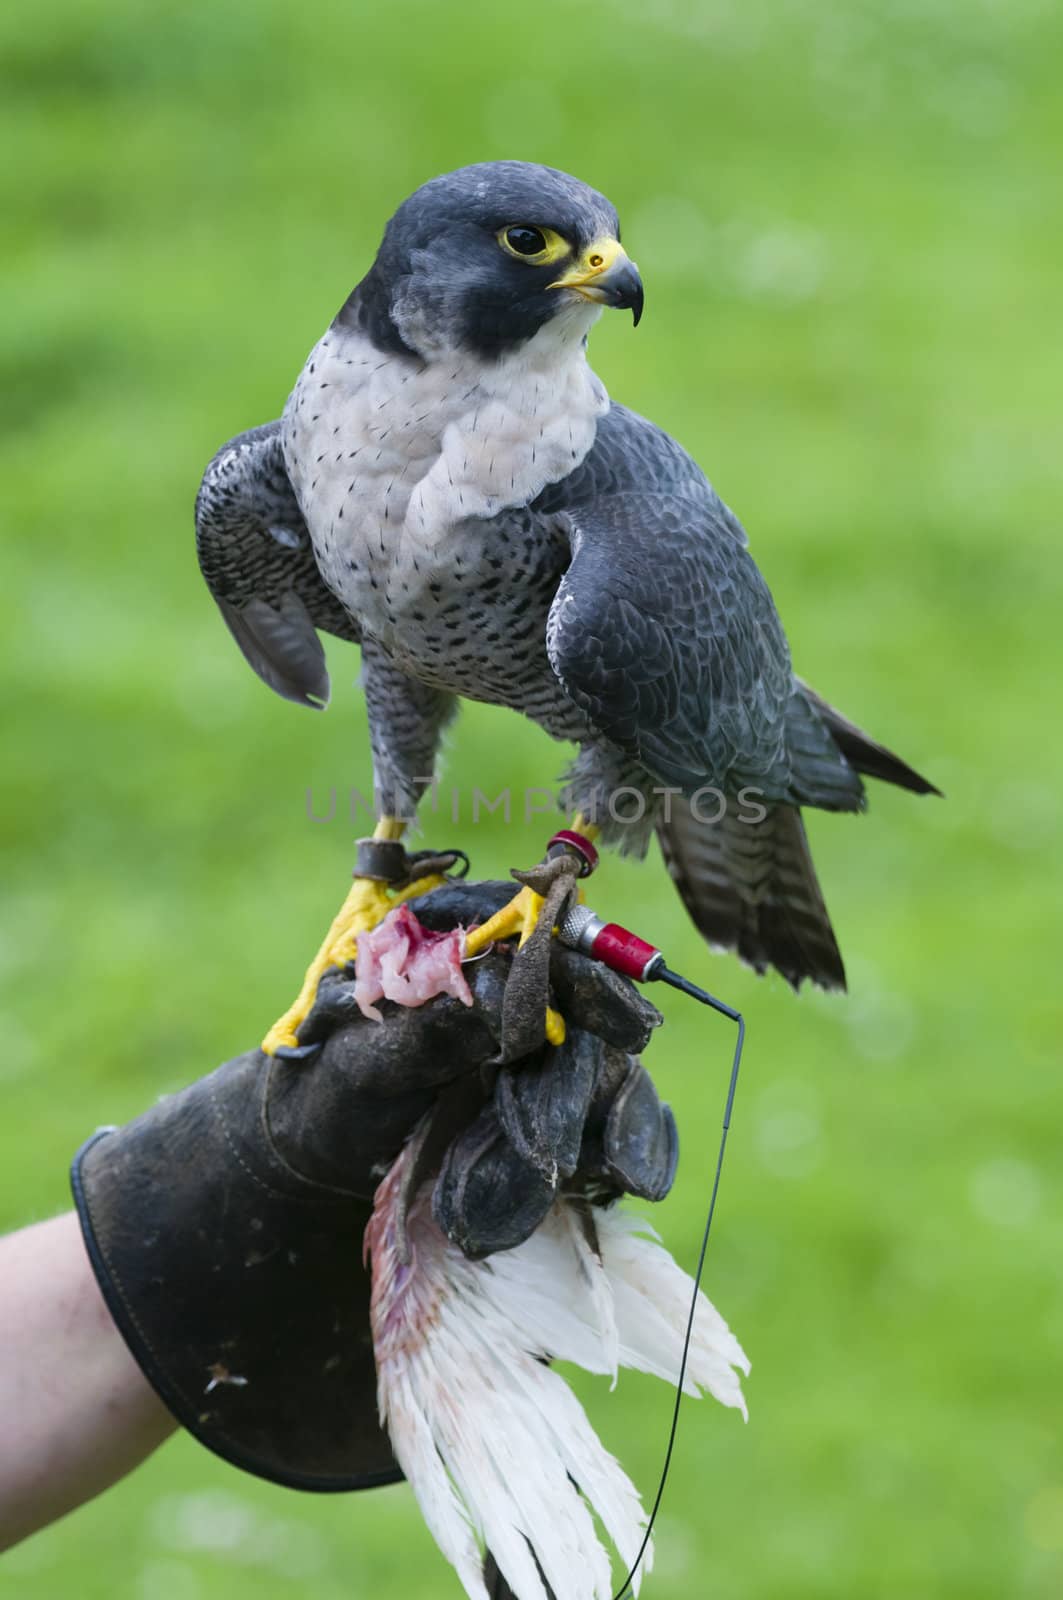 Peregrine Falcon (Falco peregrinus on training by AlessandroZocc